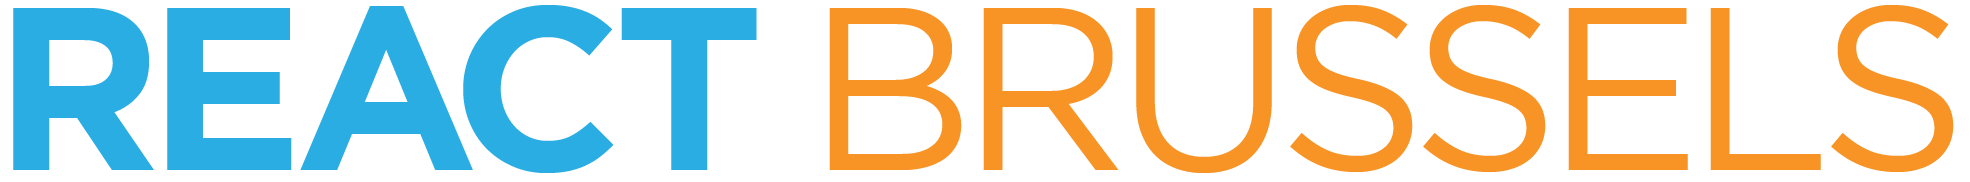 React Brussels logo